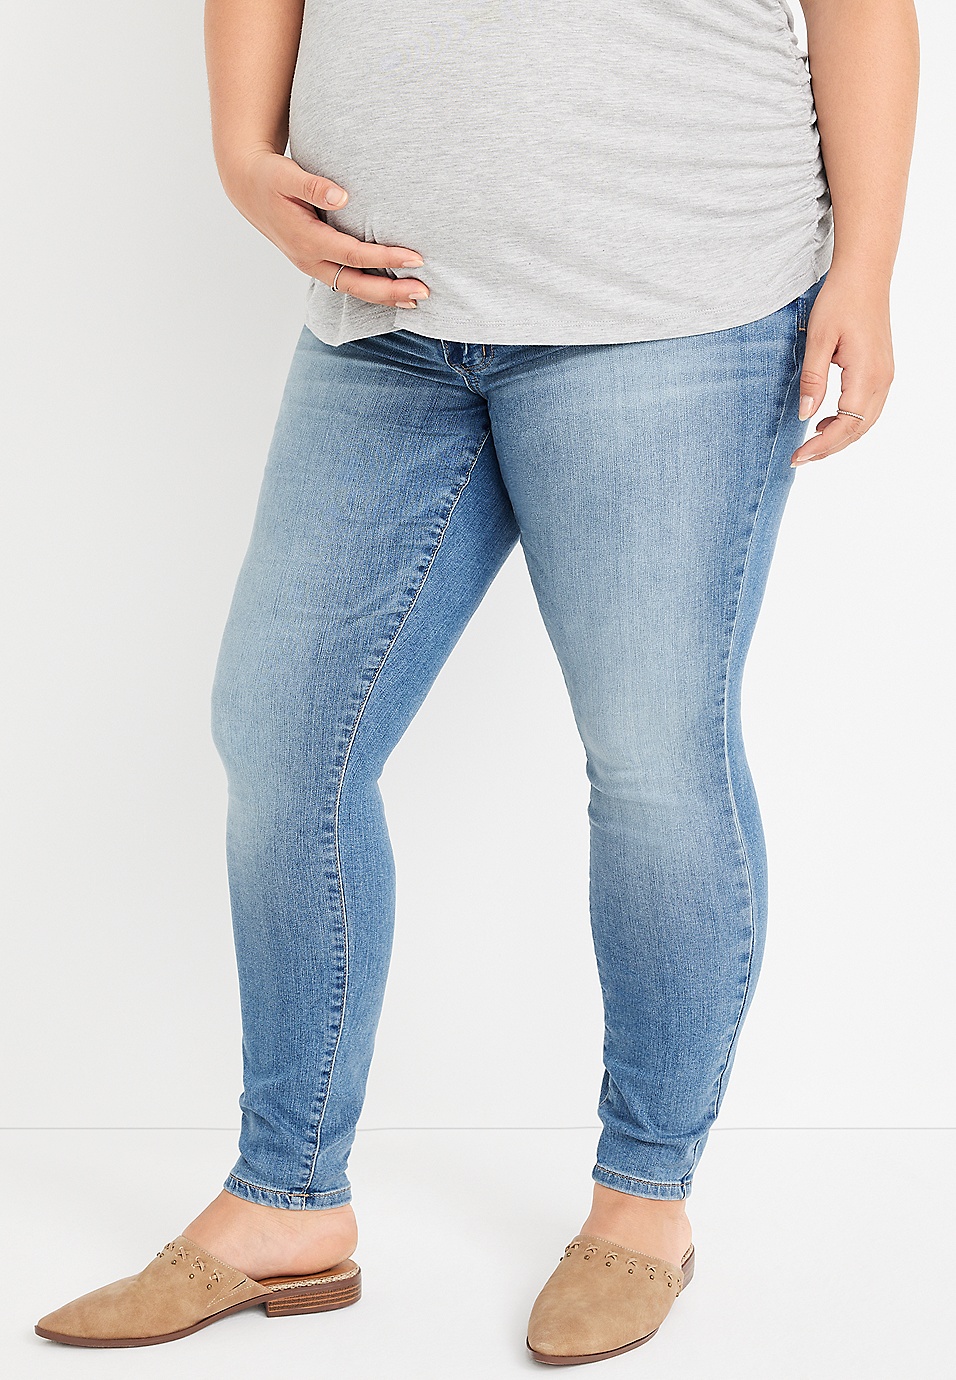 Women's Maternity Jeans Jeggings Full-Panel Pull-On Ripped